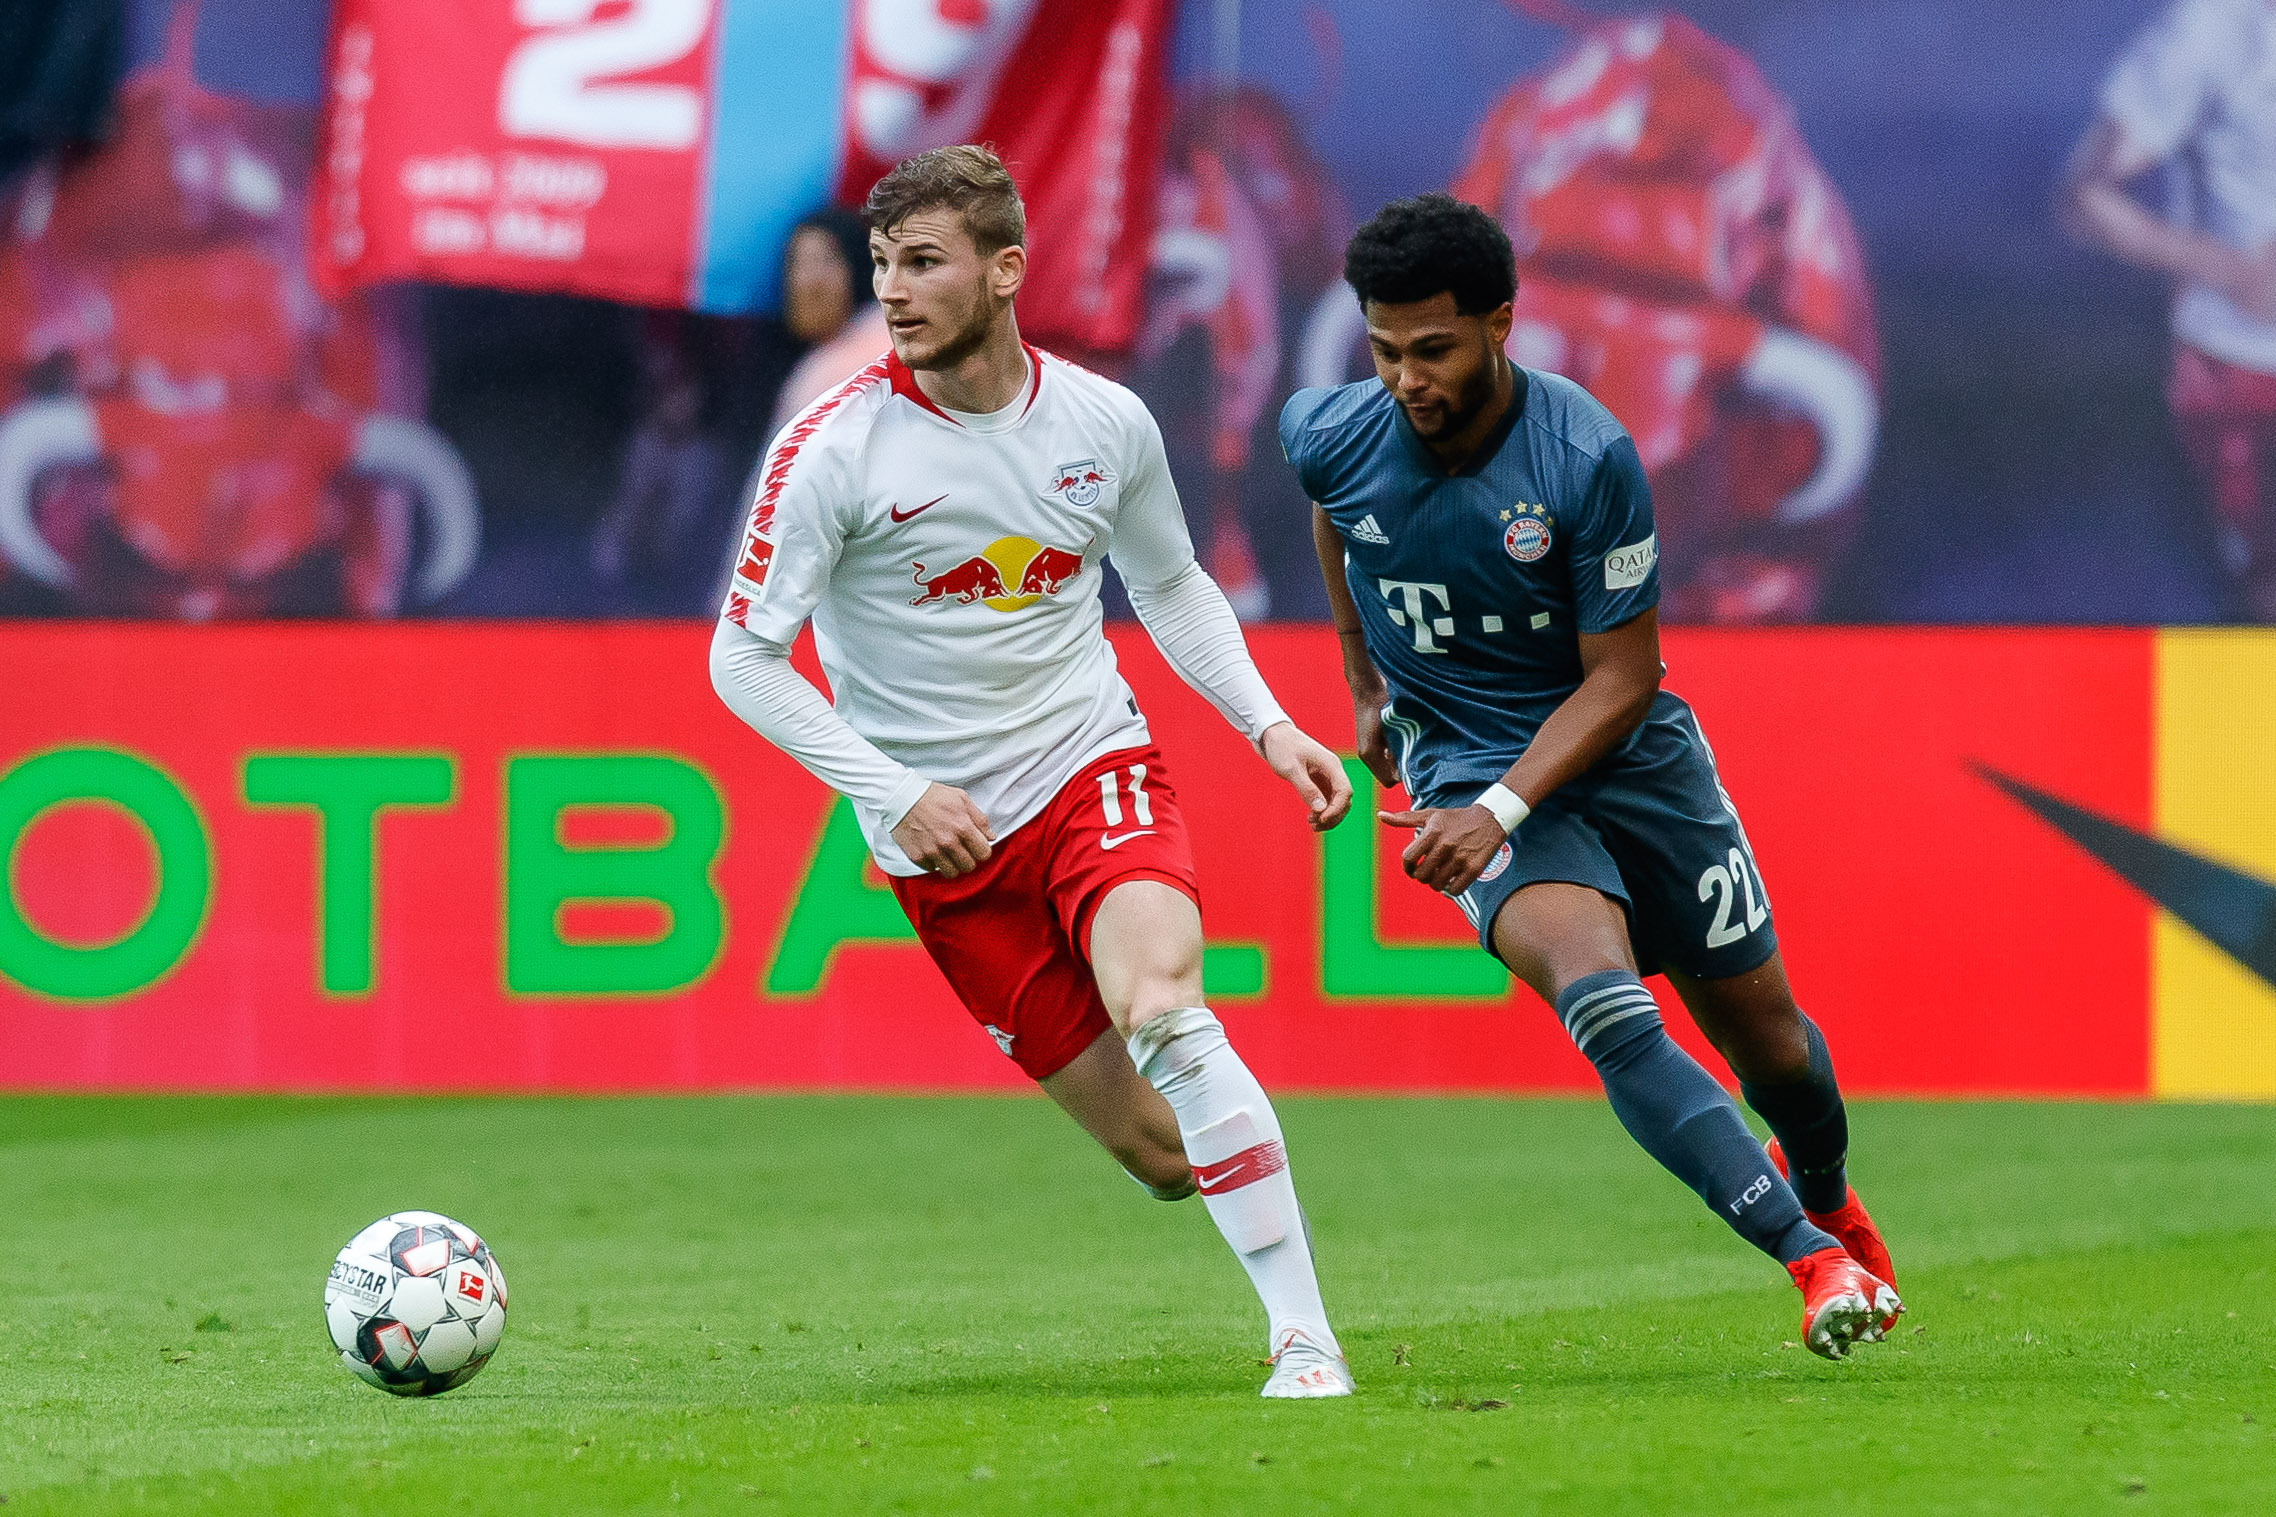 Rb Leipzig Vs Bayern Munich 19 Dfb Pokal Final Odds Live Stream Schedule News Scores Highlights Stats And Rumors Bleacher Report